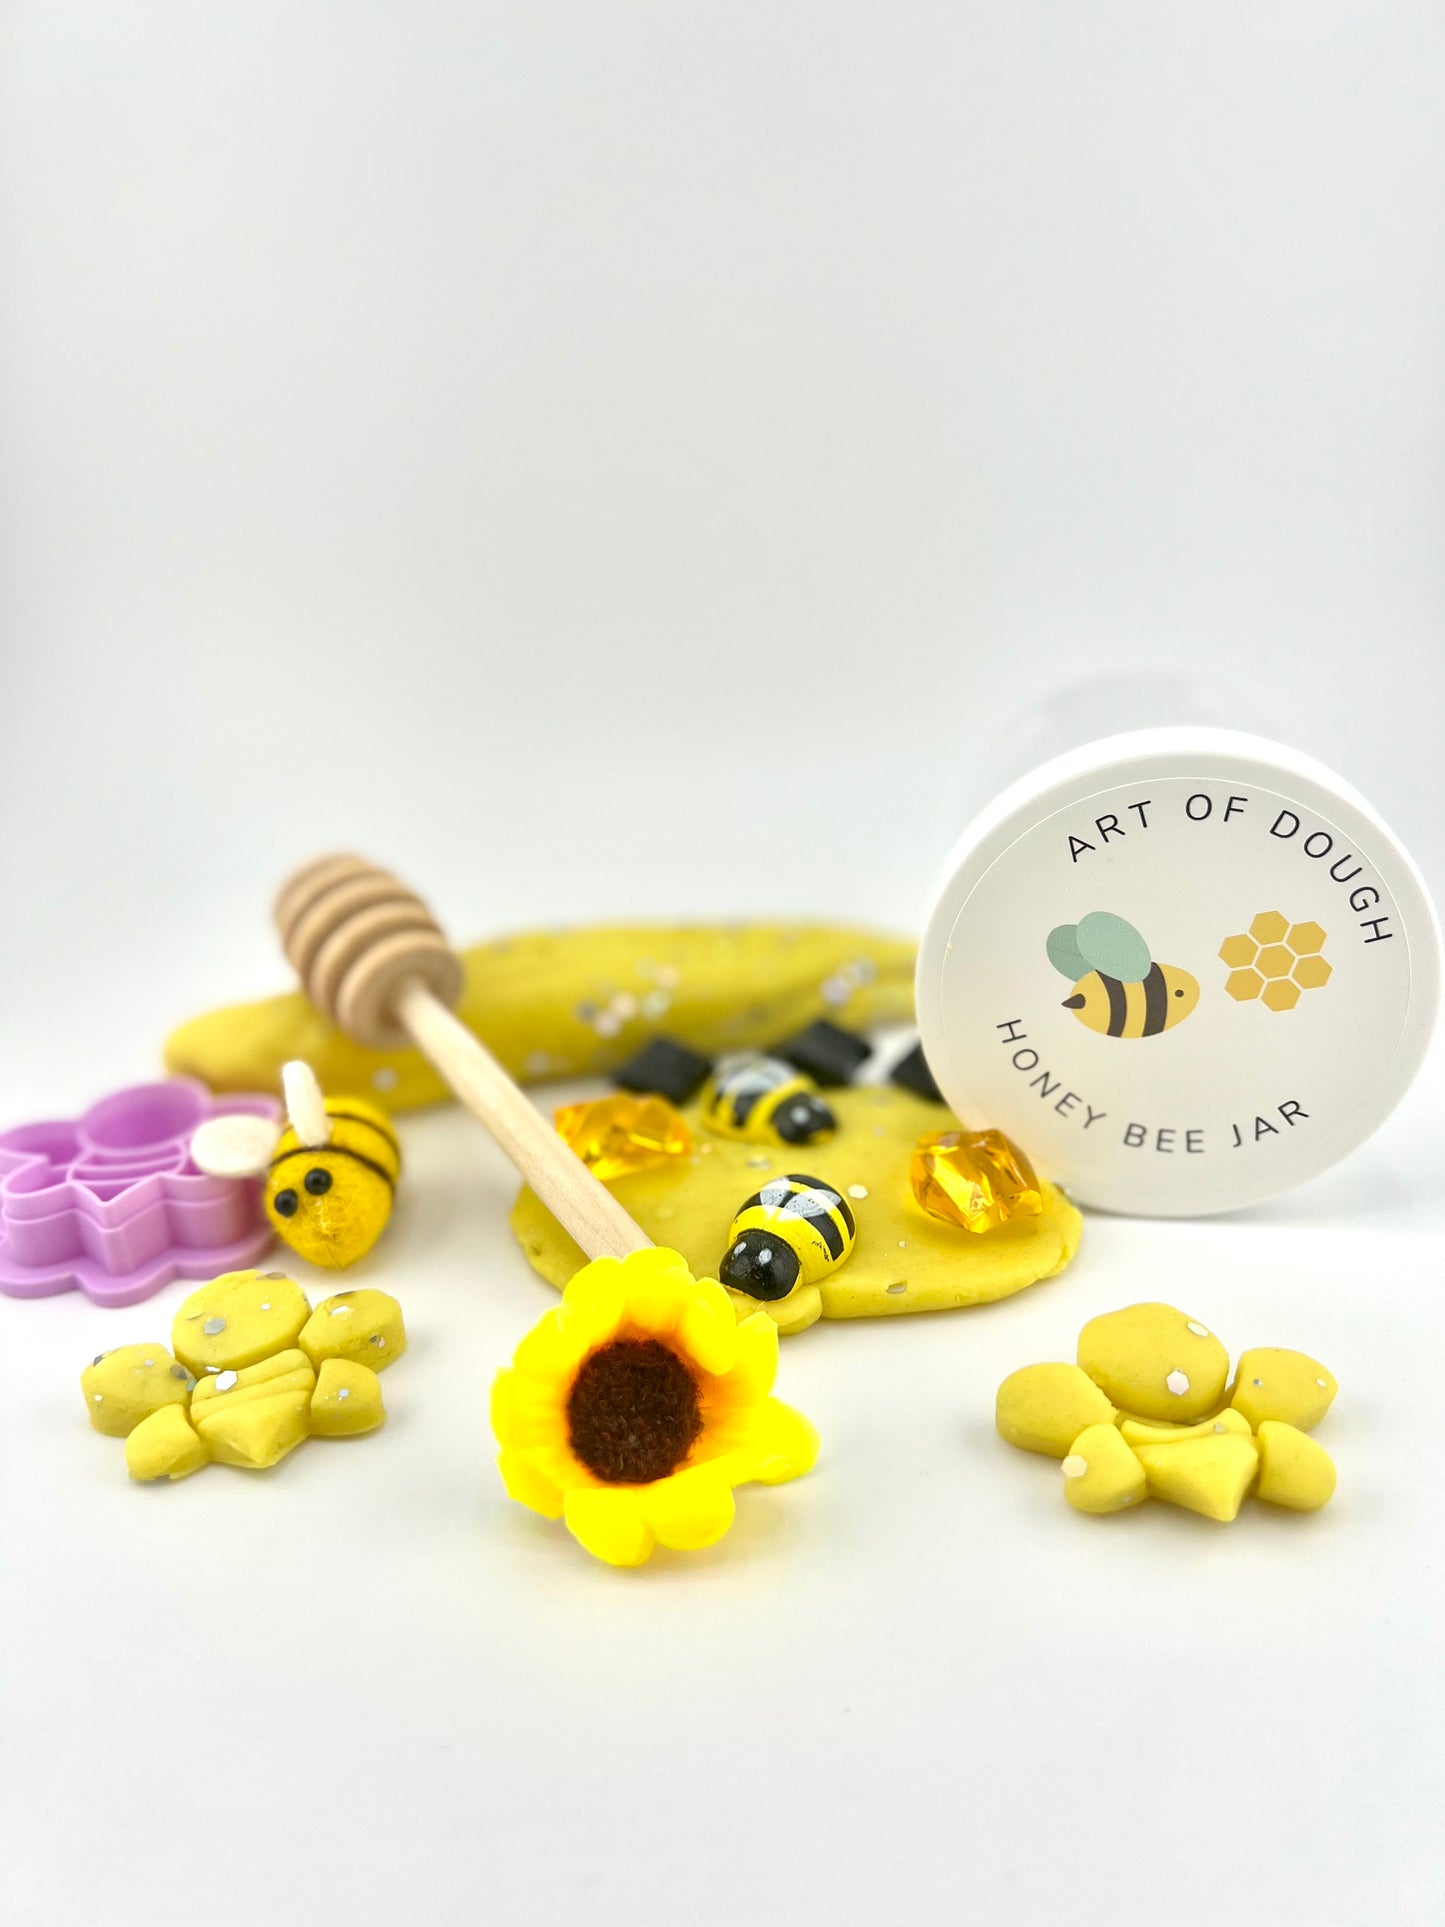 Honey Bee Jar - Art of Dough